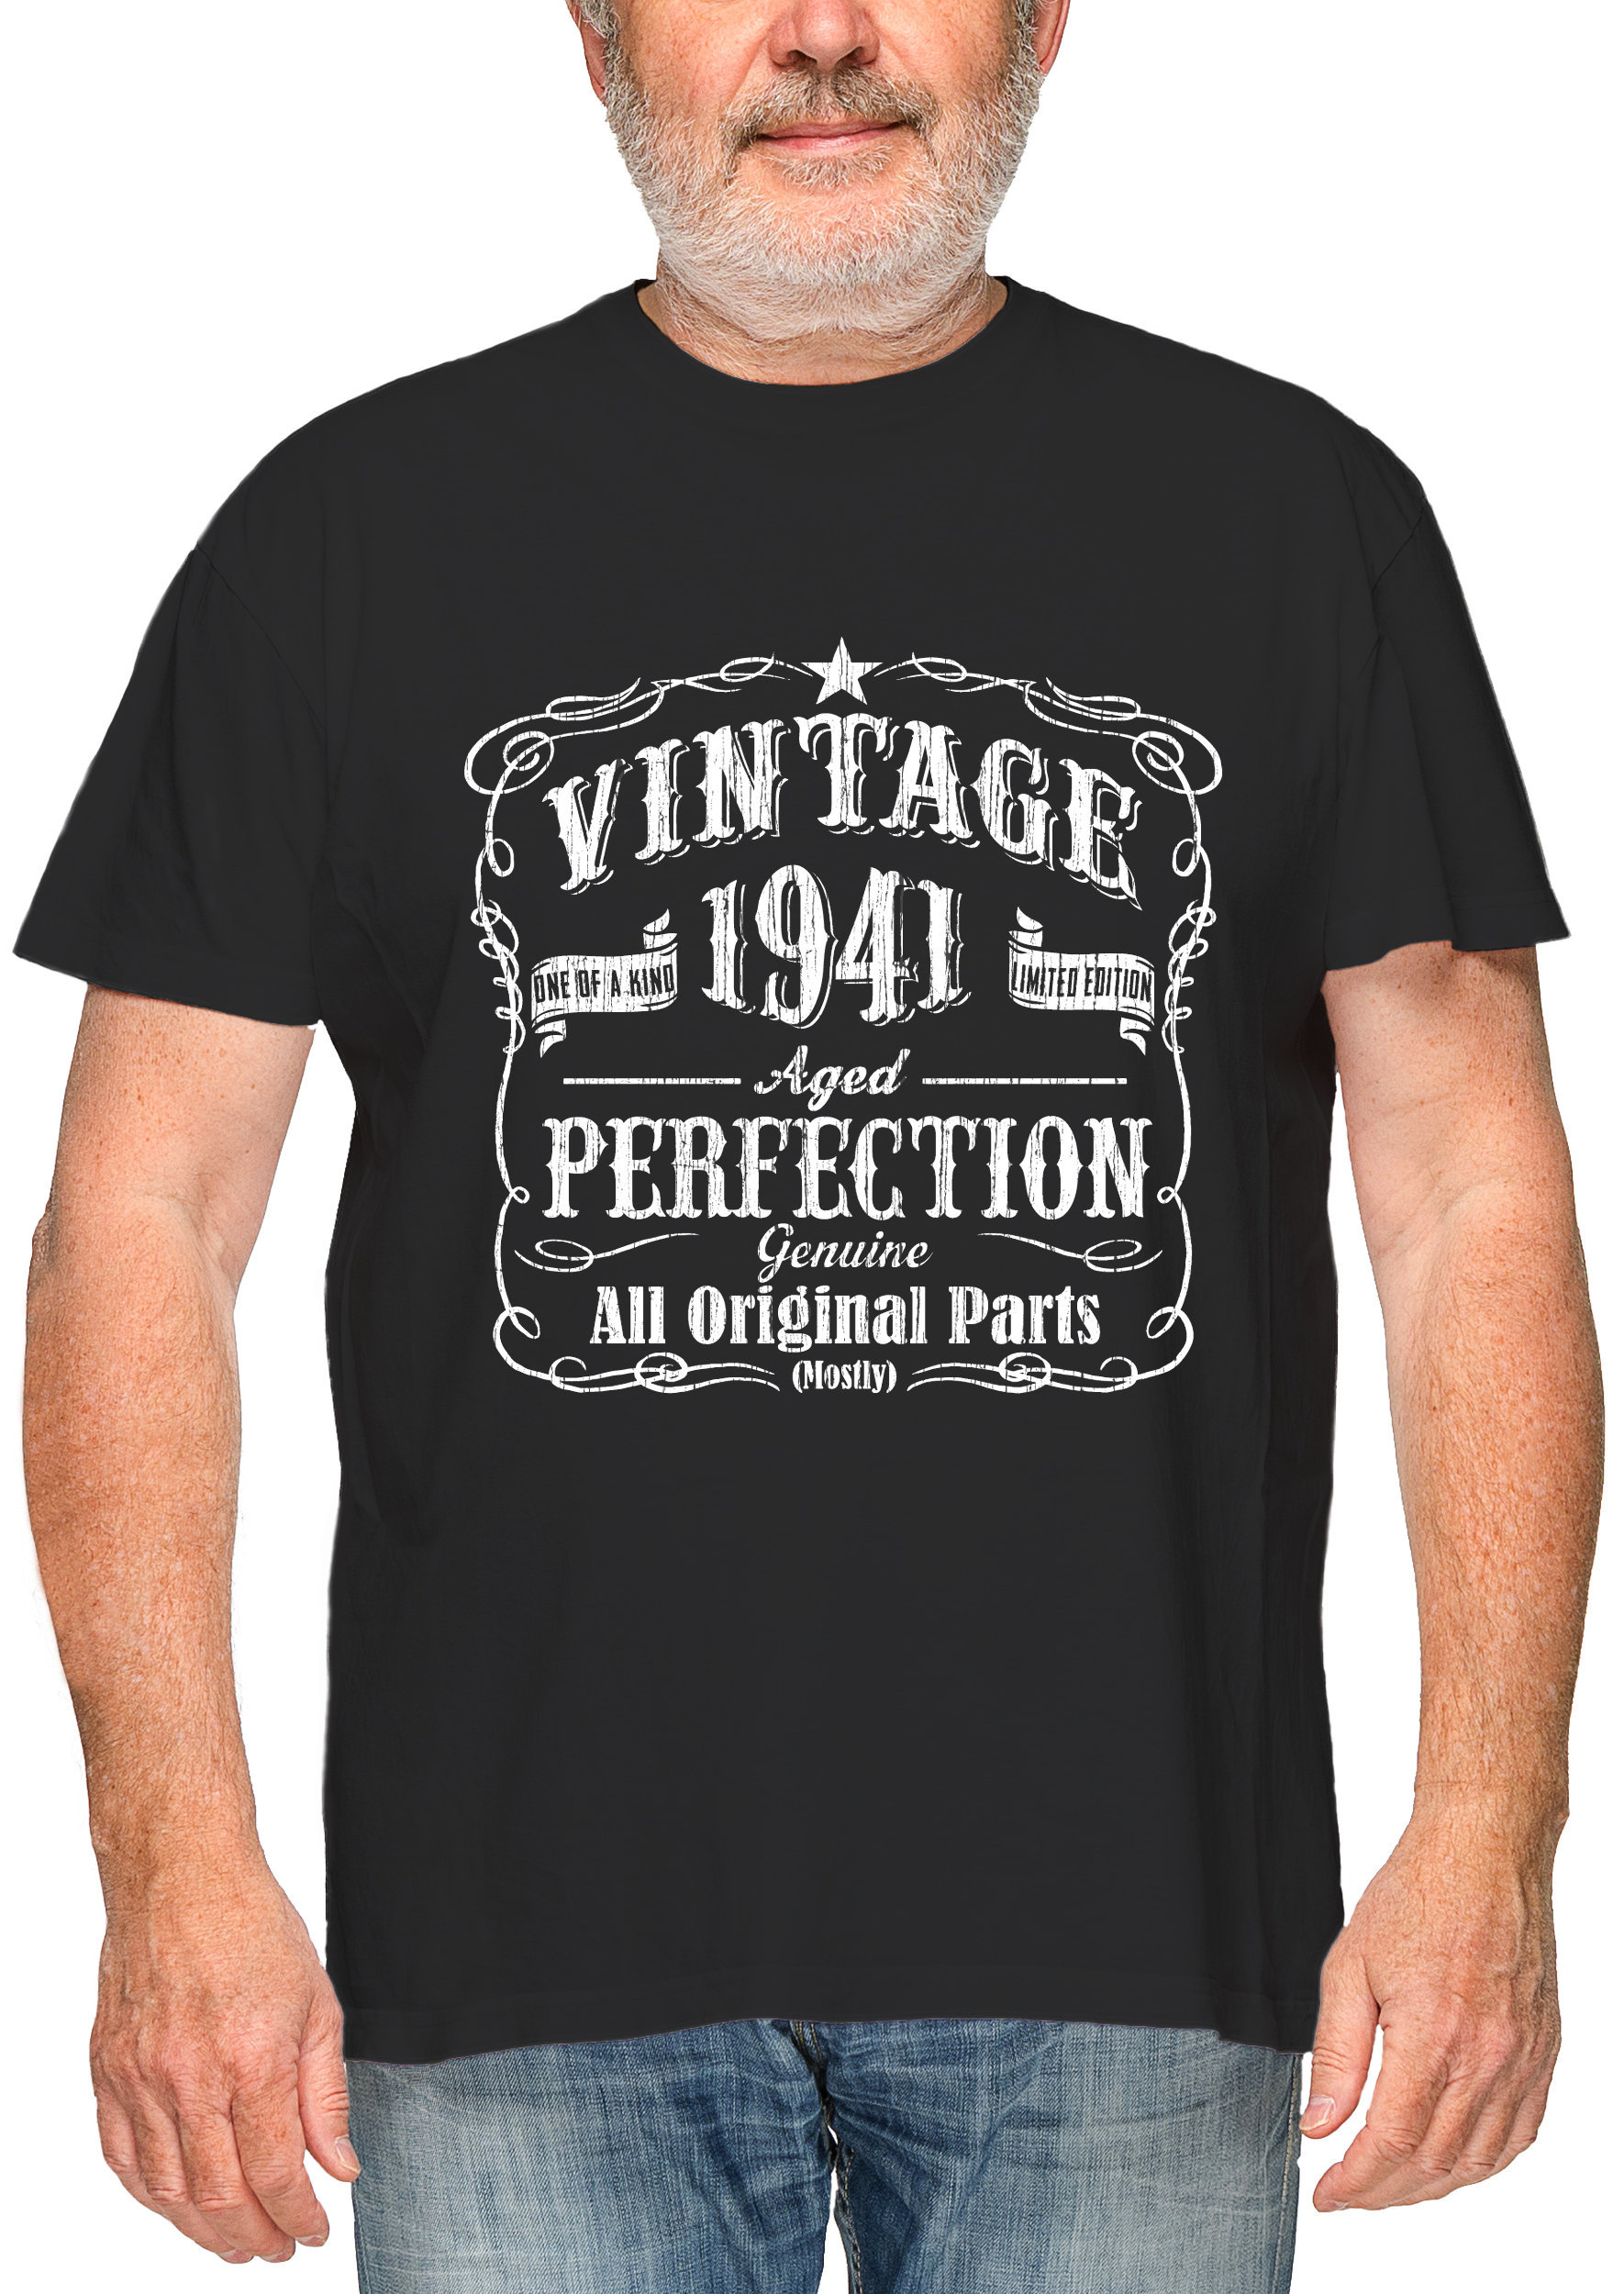 Retro Vintage 1941 Shirt Authentic Vintage 1941 T-Shirt 1941 Men T-Shirt 80th Birthday Shirt Born in 1941 Gift Tees